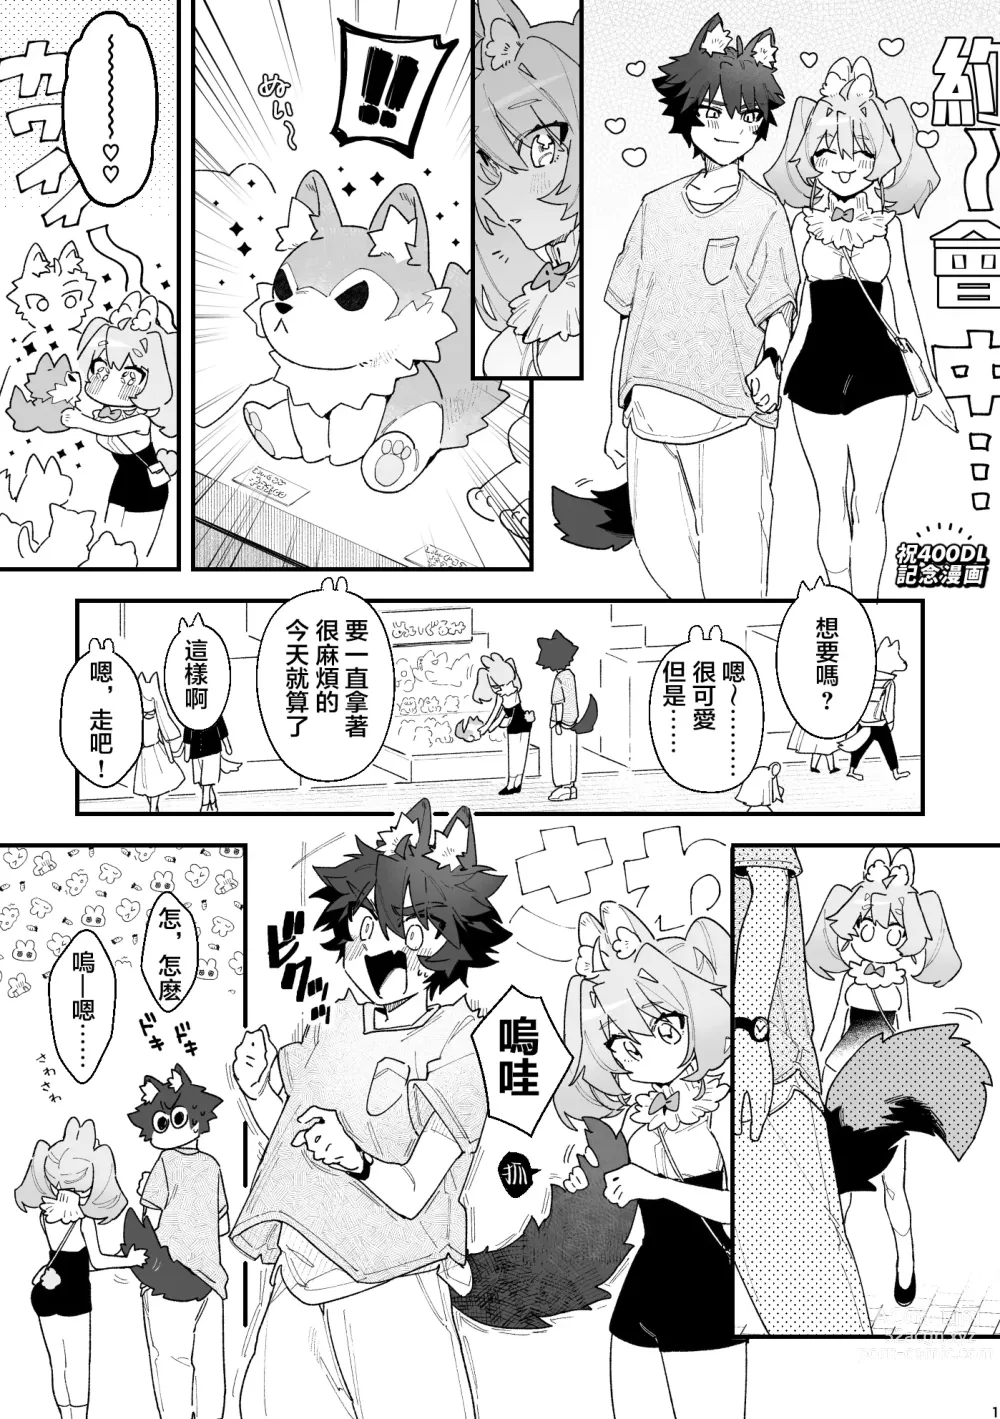 Page 44 of doujinshi ♂ ga Uke. Usagi-chan x Ookami-kun